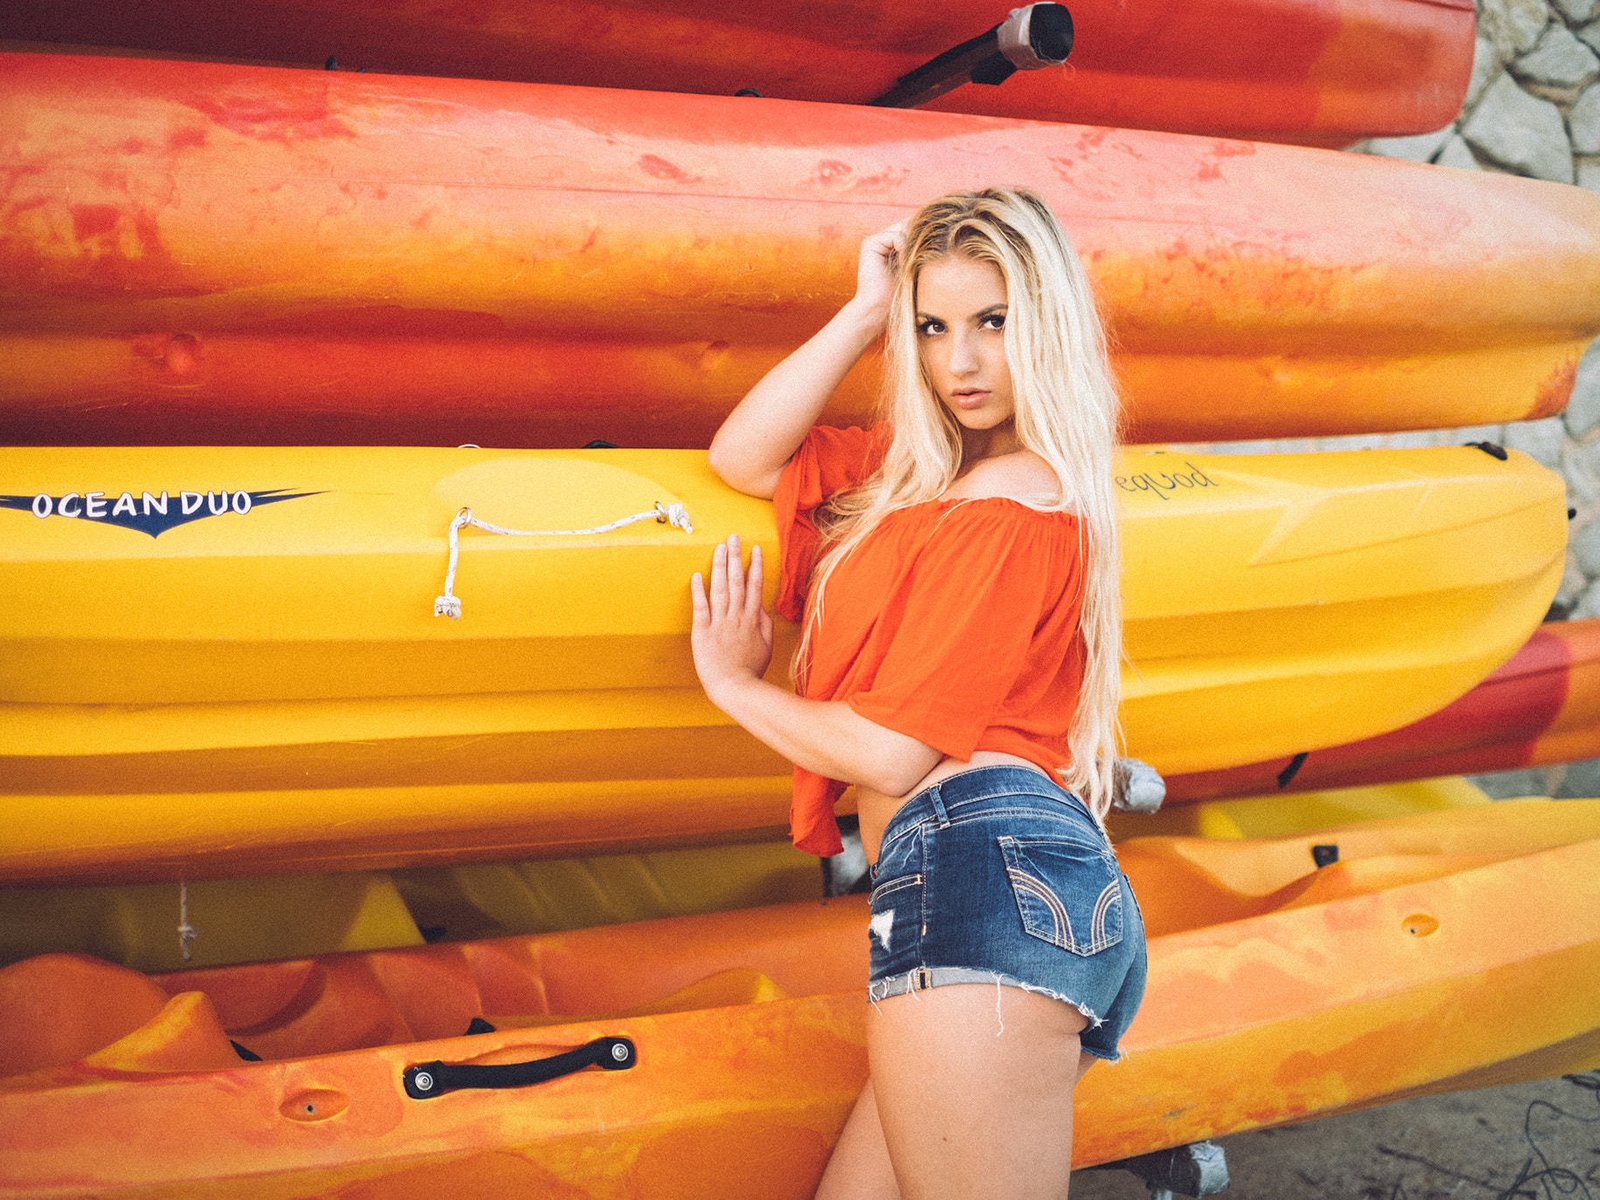 Image: Girl, blonde, posing, shorts, boat